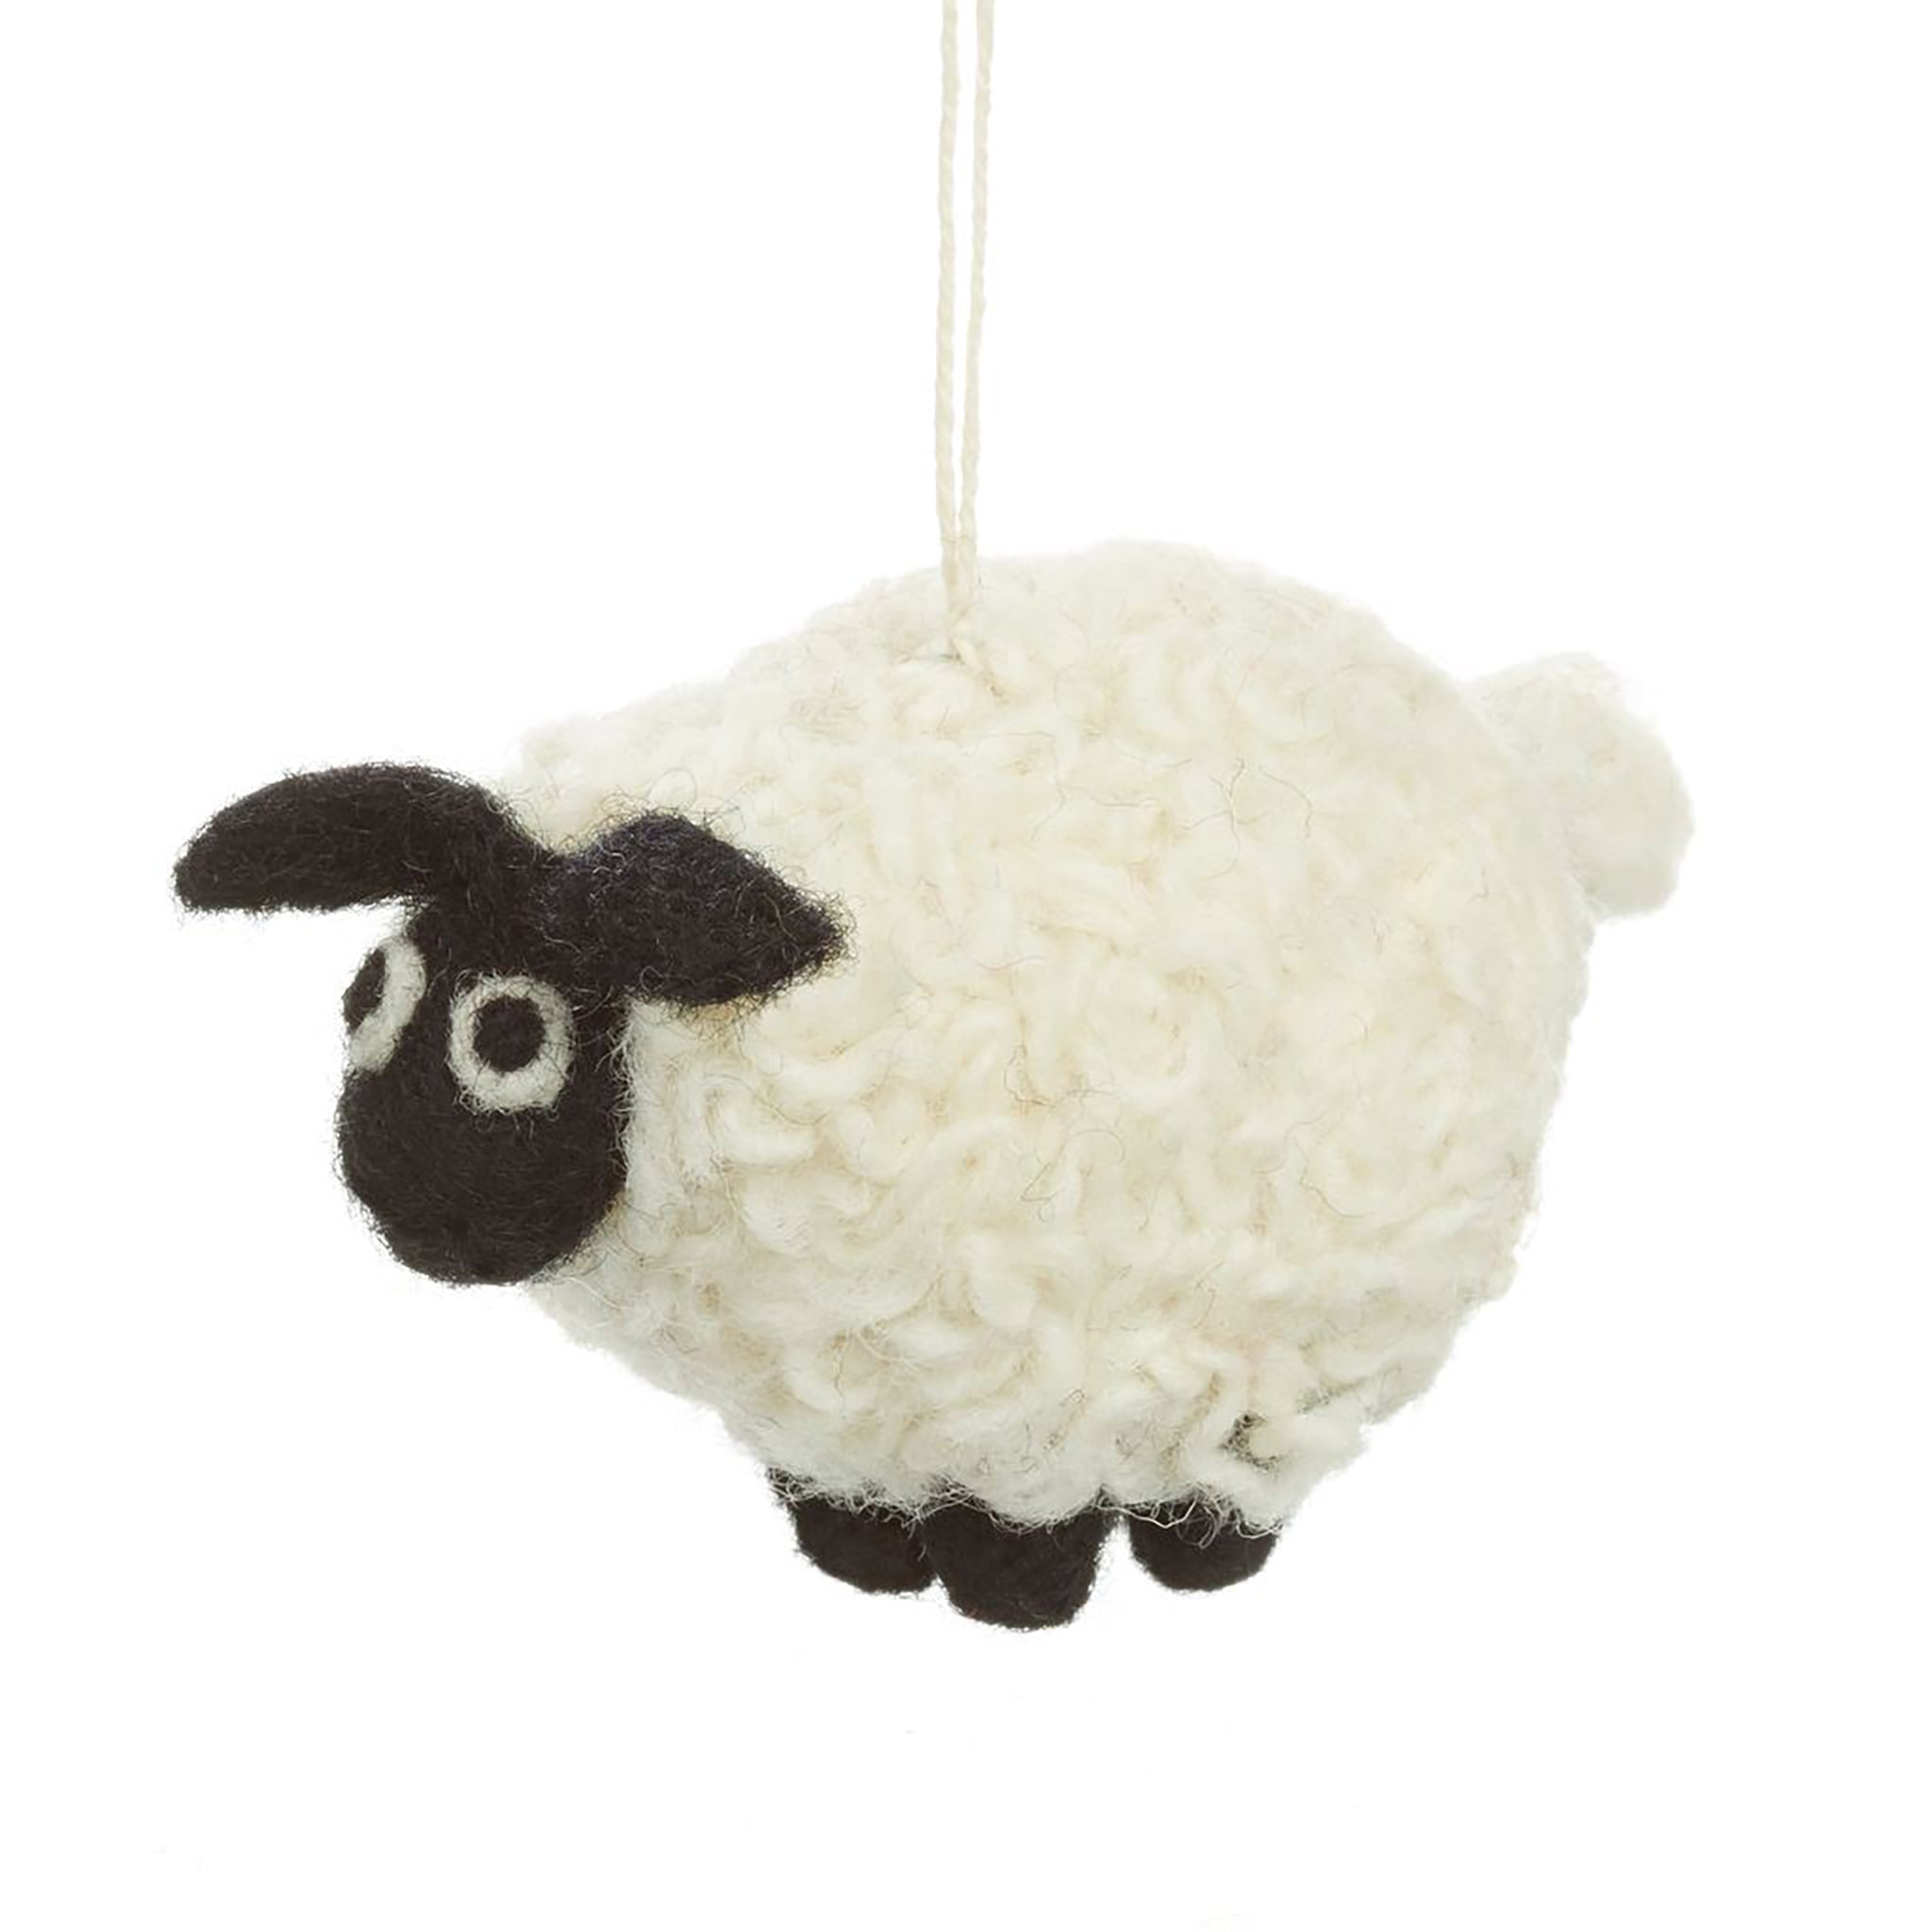 Felt So Good felted sheep hanging decoration